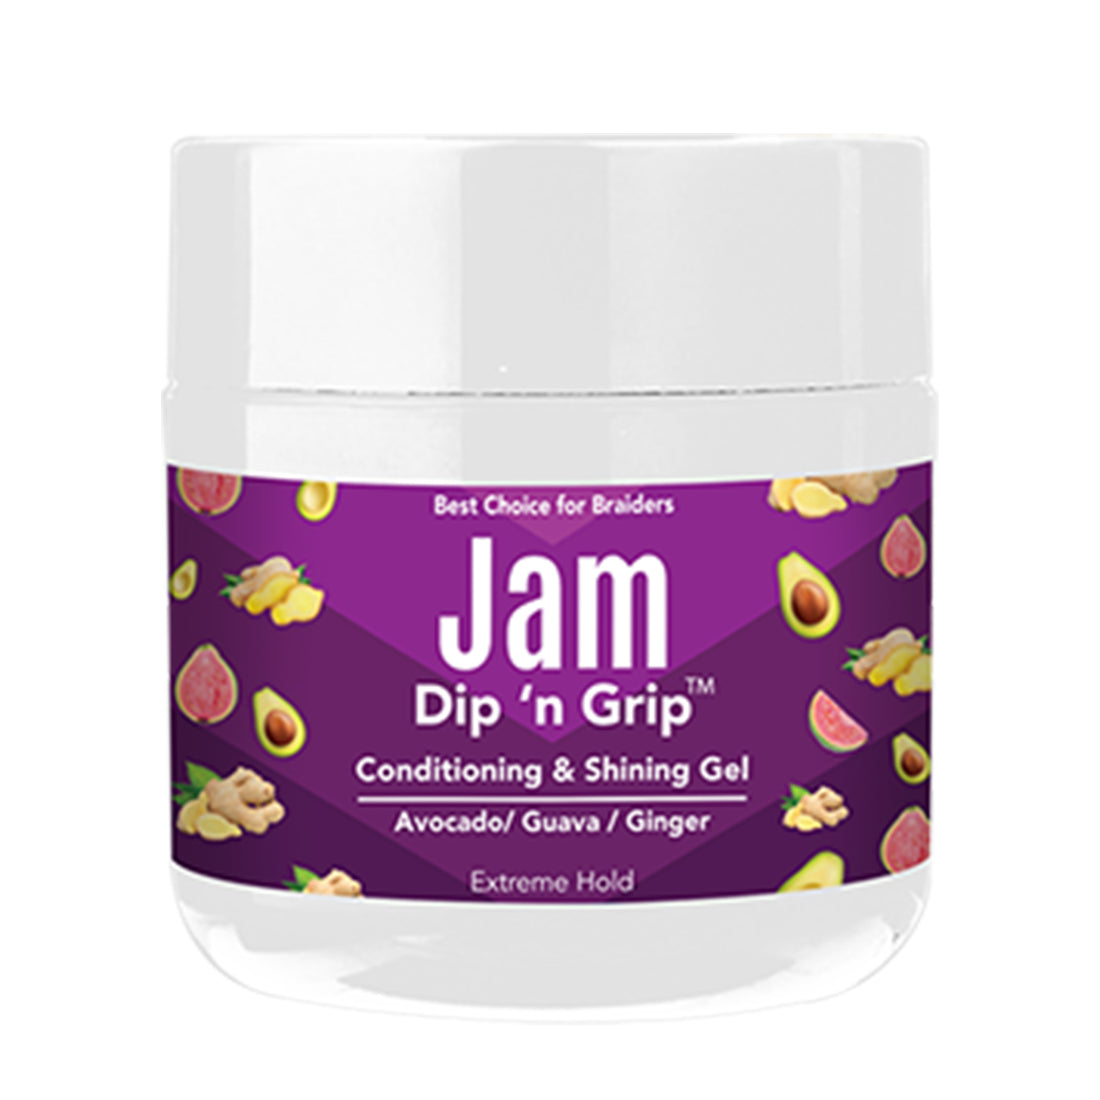 Jam Dip N Grip  Avocado/Guava/Ginger Shining Gel (4oz)